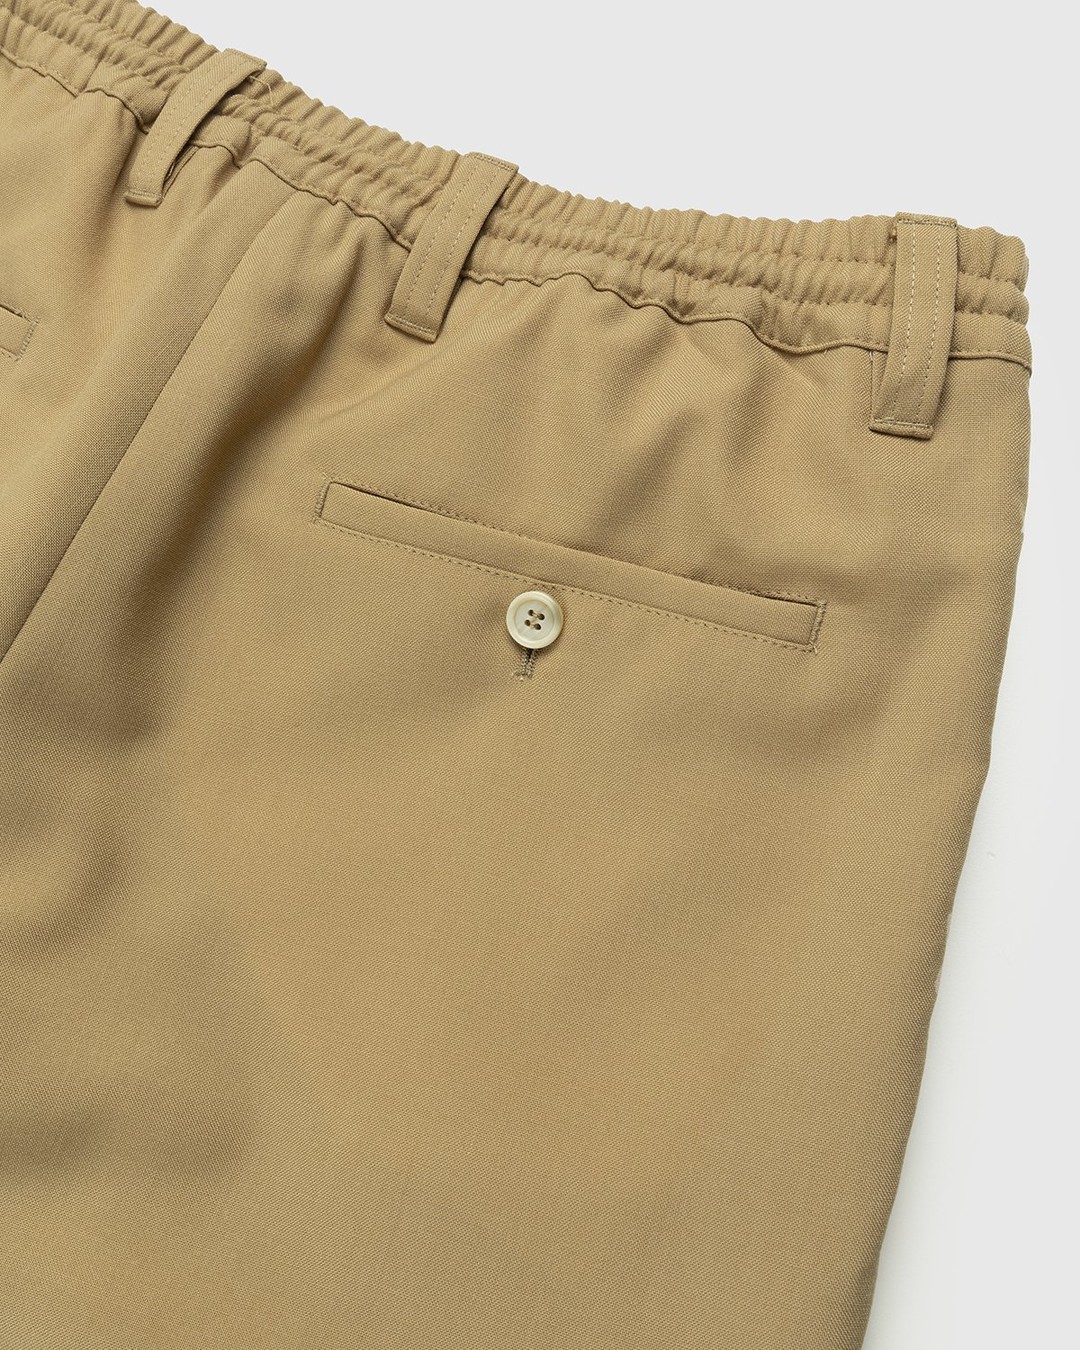 Marni – Tropical Wool Trousers Dijon - Trousers - Brown - Image 3